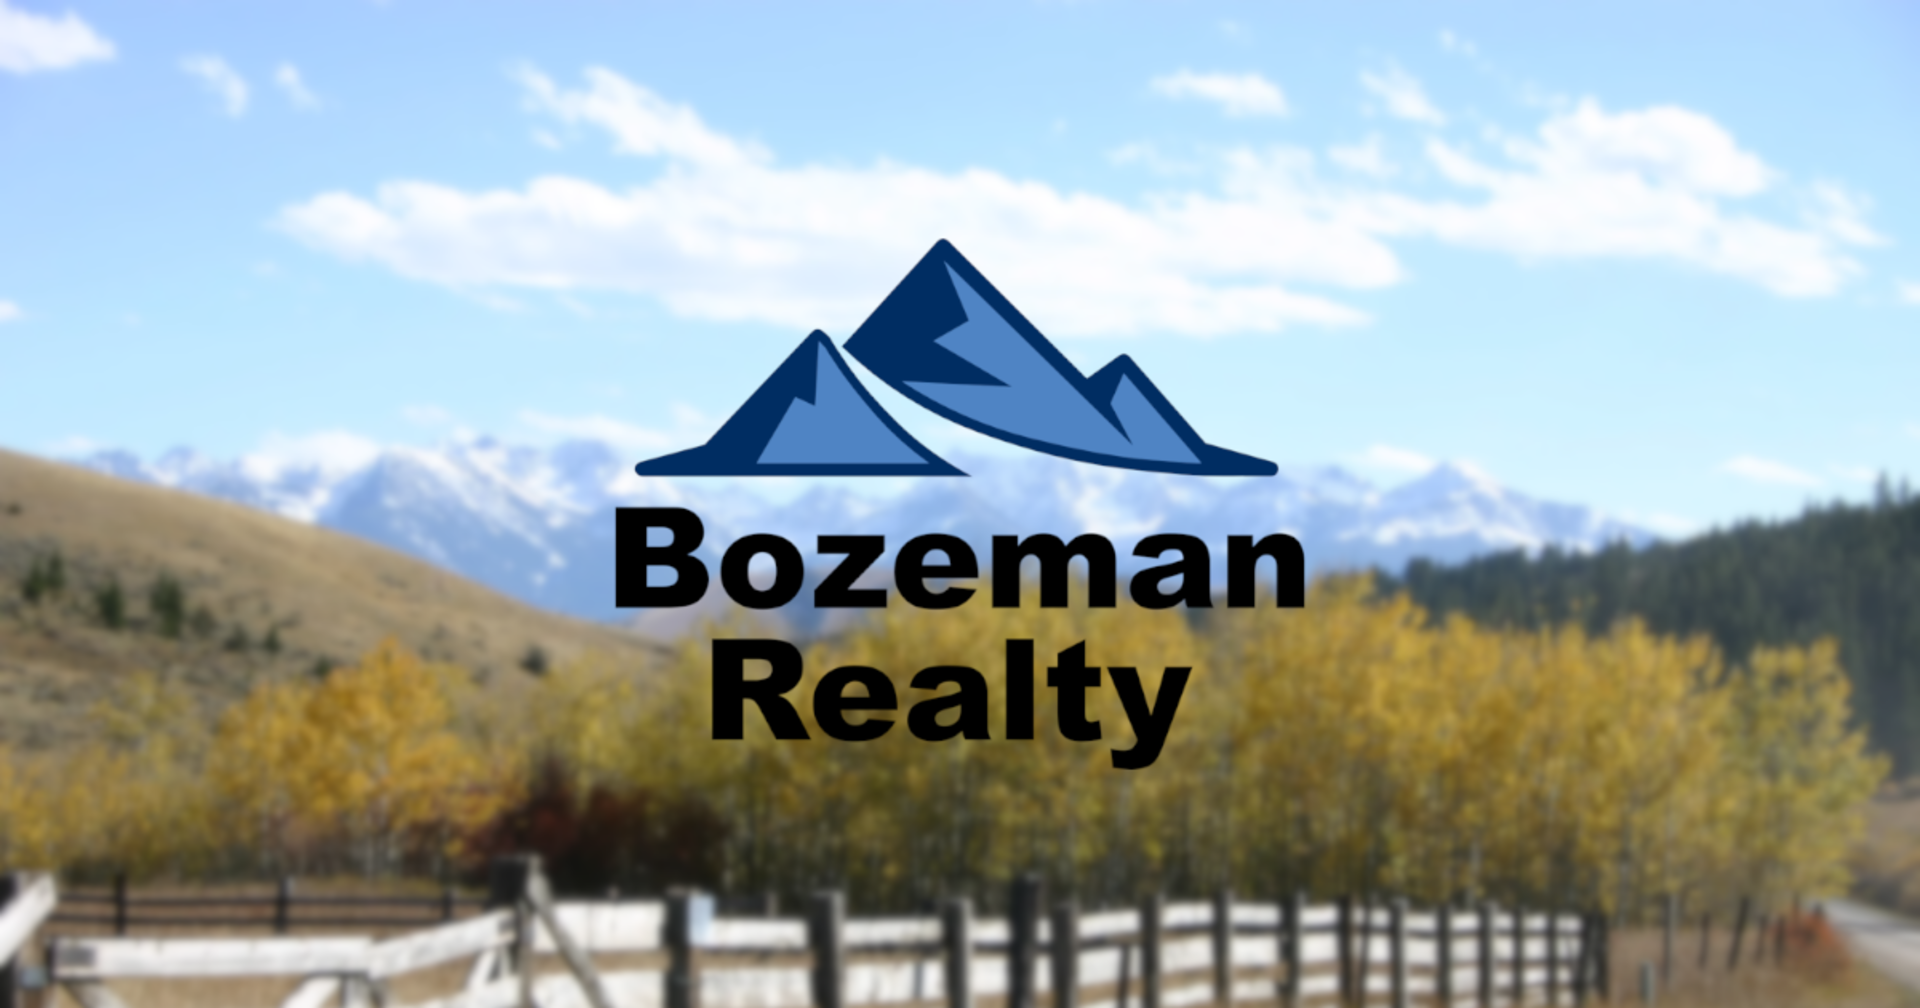 About - Liz Nitz - Bozeman Real Estate Agent